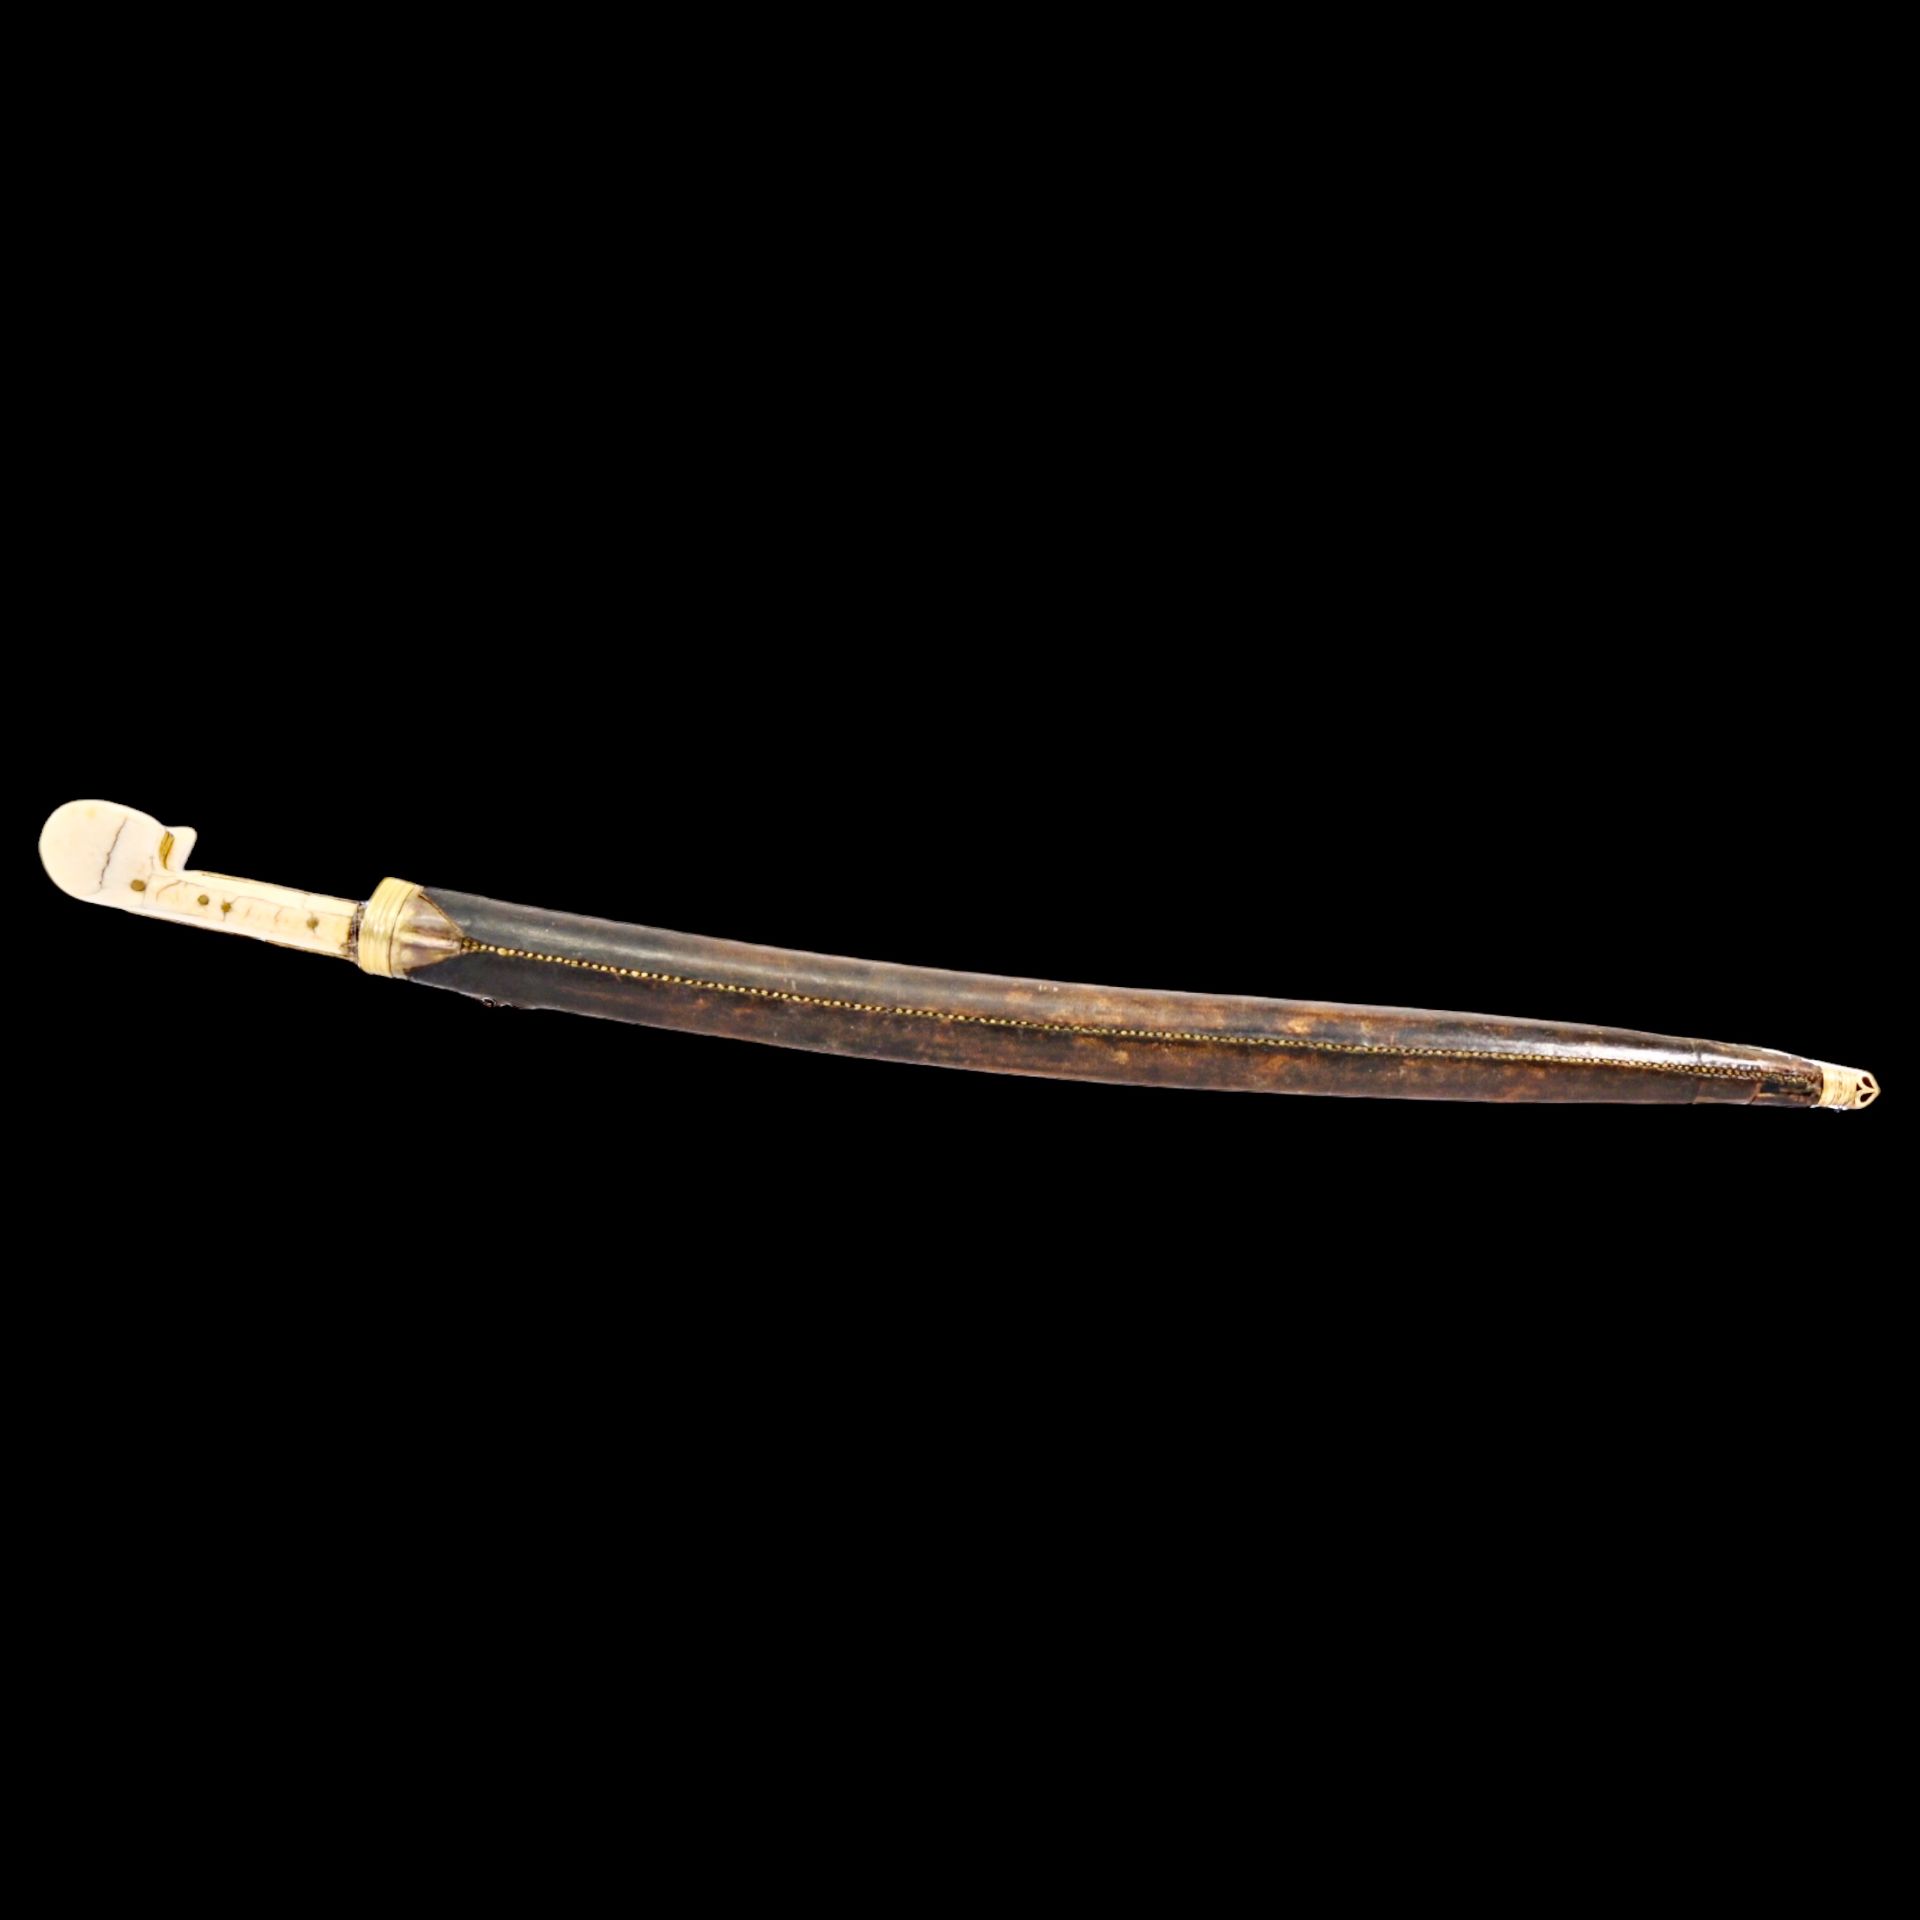 Magnificent Ottoman yatagan sword with bone hilt and gold kofgari on the blade, 1823. - Image 3 of 32